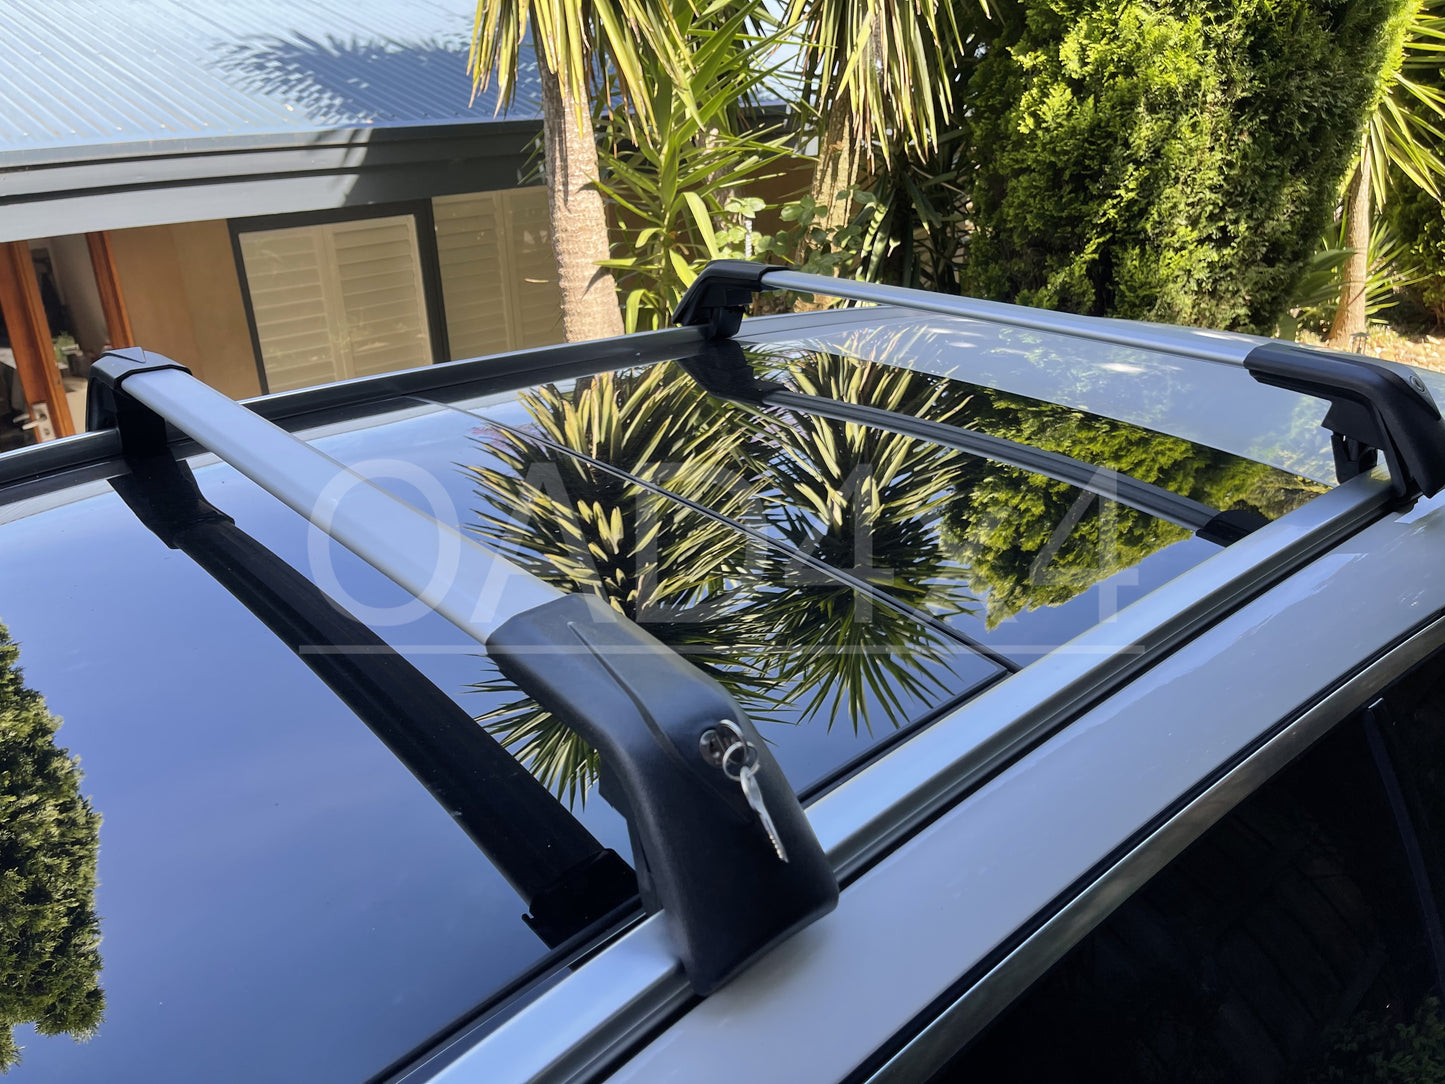 1 Pair Aluminum Silver Cross Bar Roof Racks Baggage Holder for Audi Q5 09-17 Clamp in Flush Rail